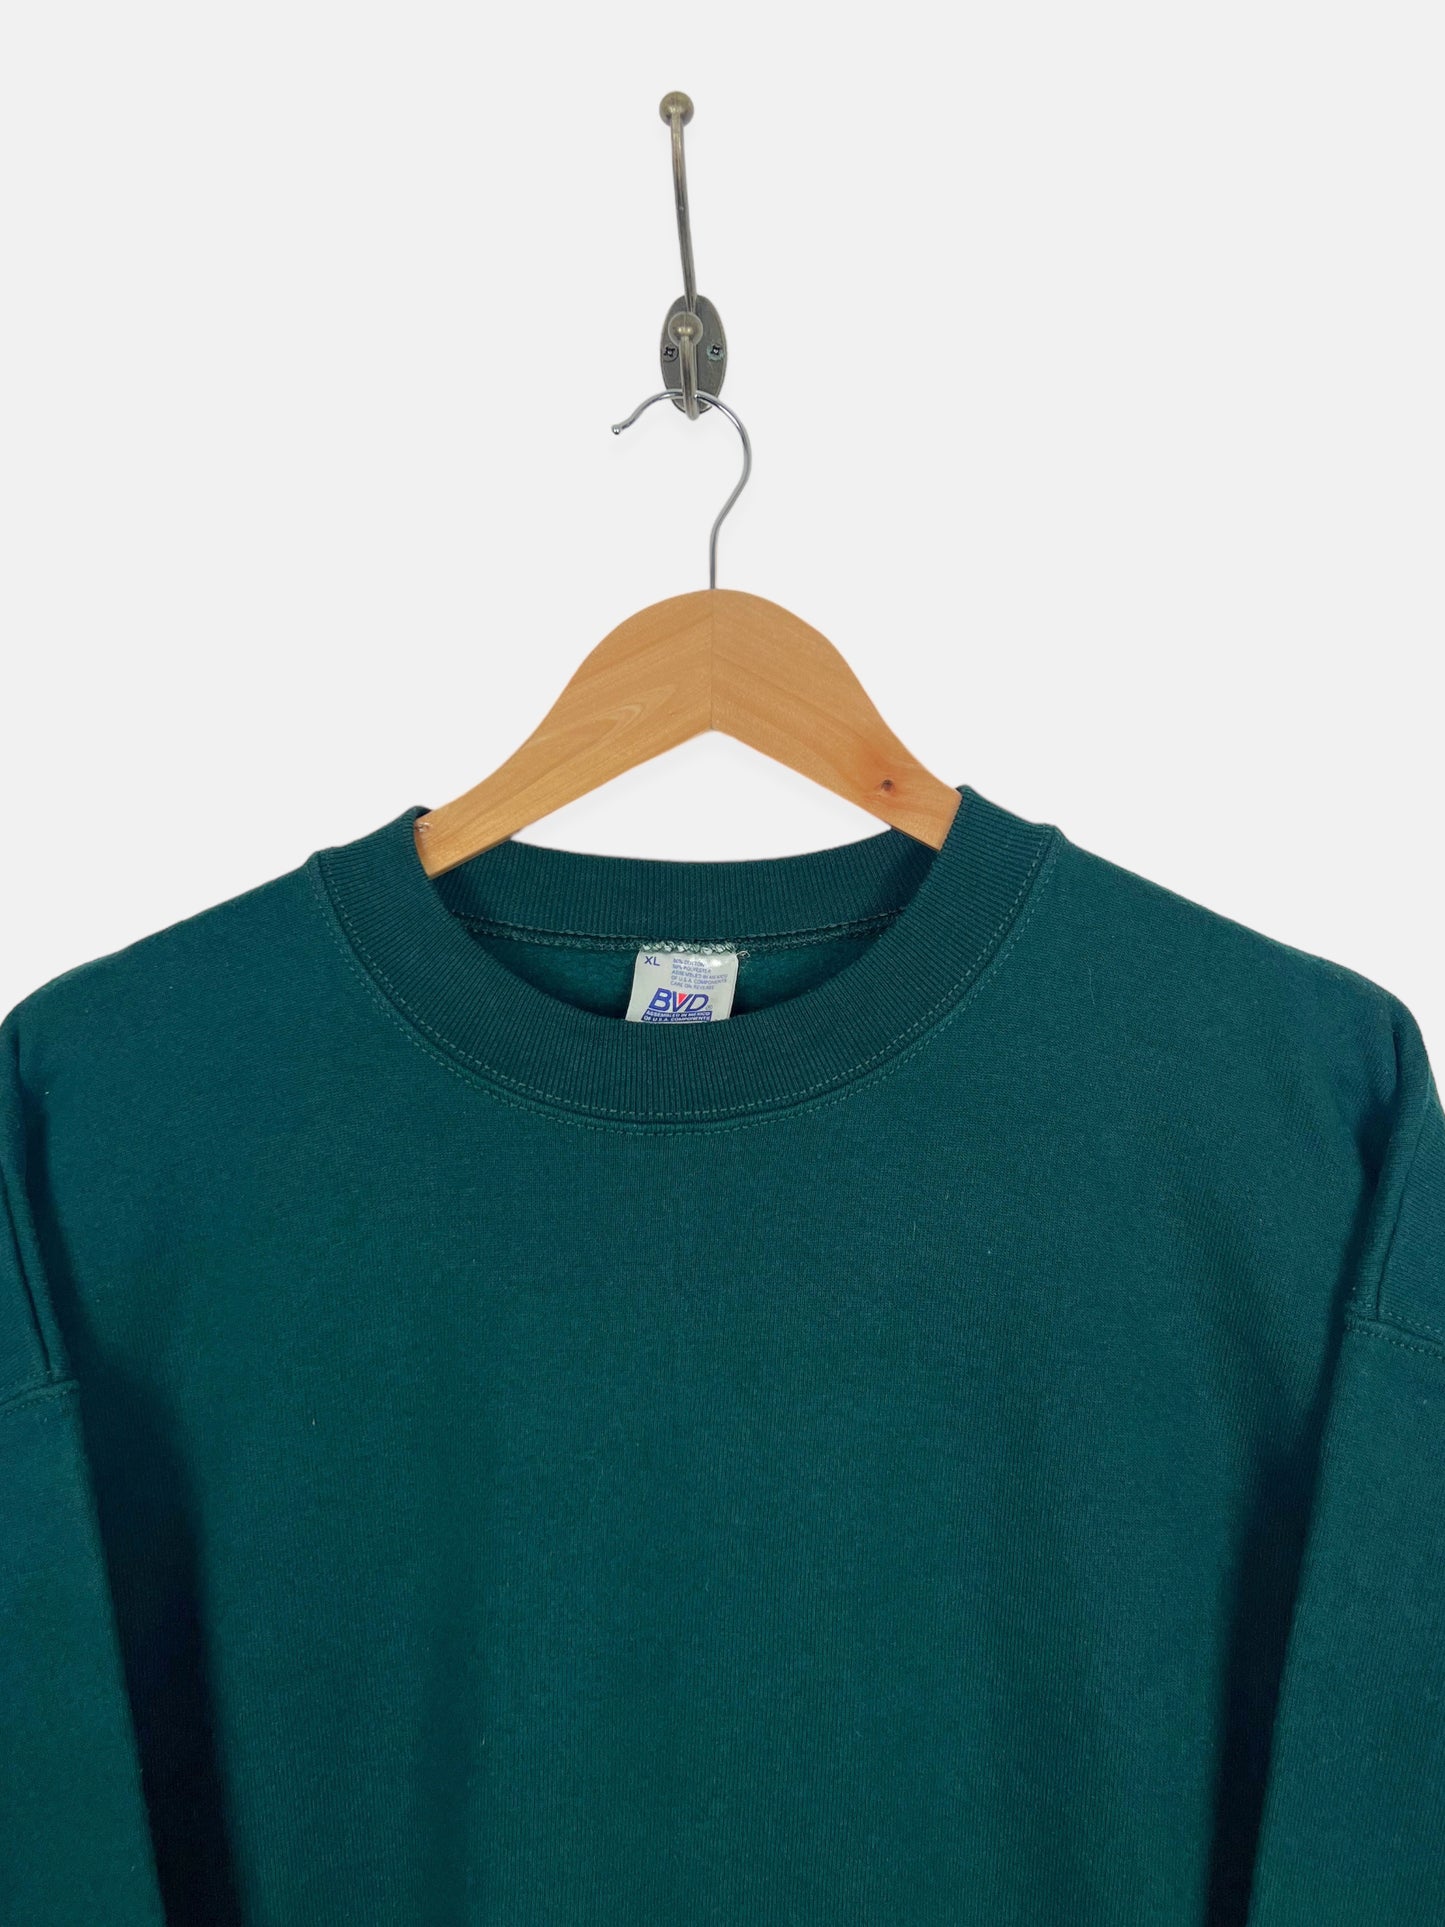 90's Green Vintage Sweatshirt Size XL